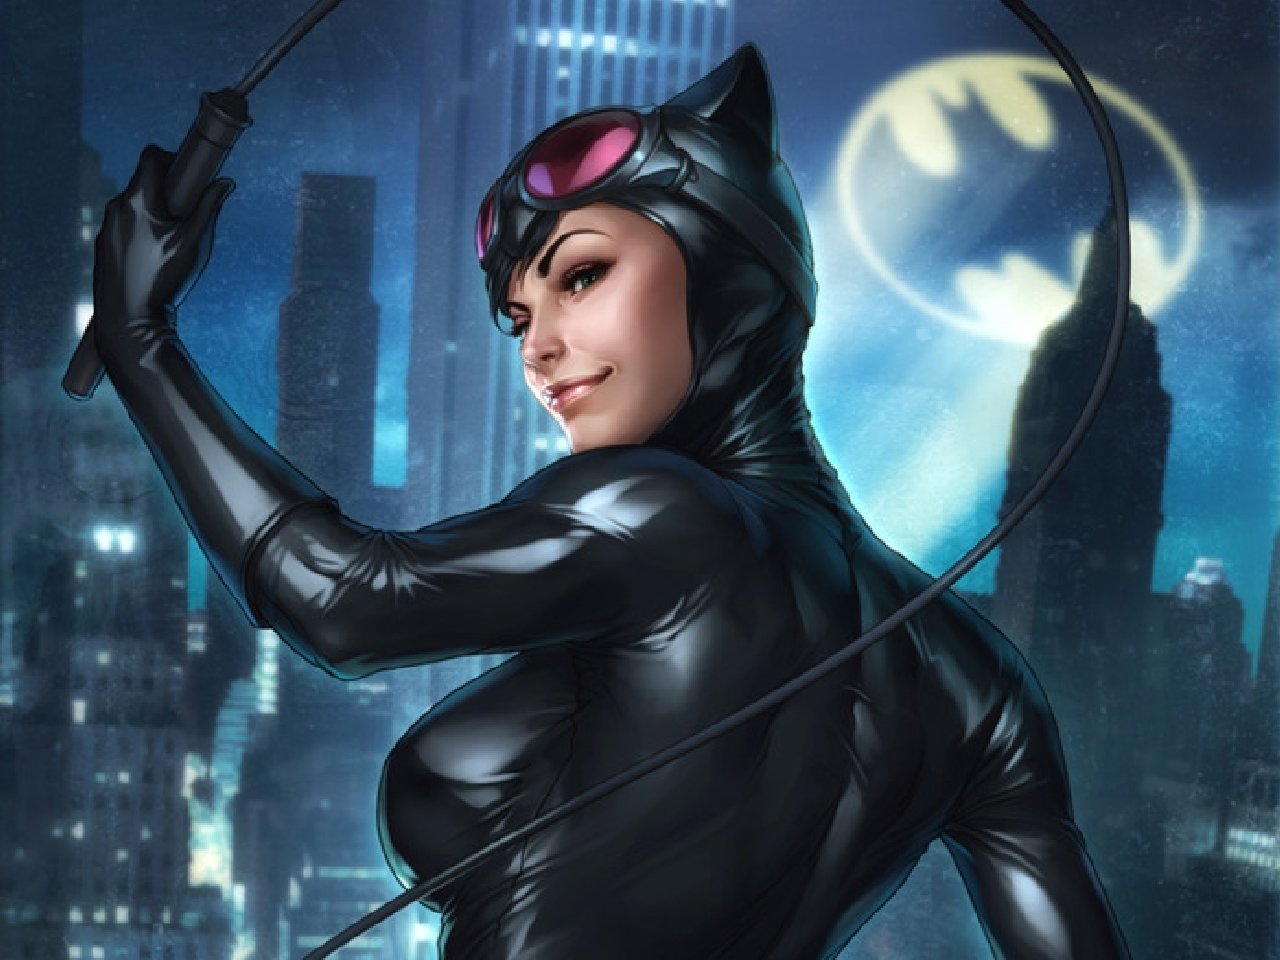 Comics catwoman Image. 